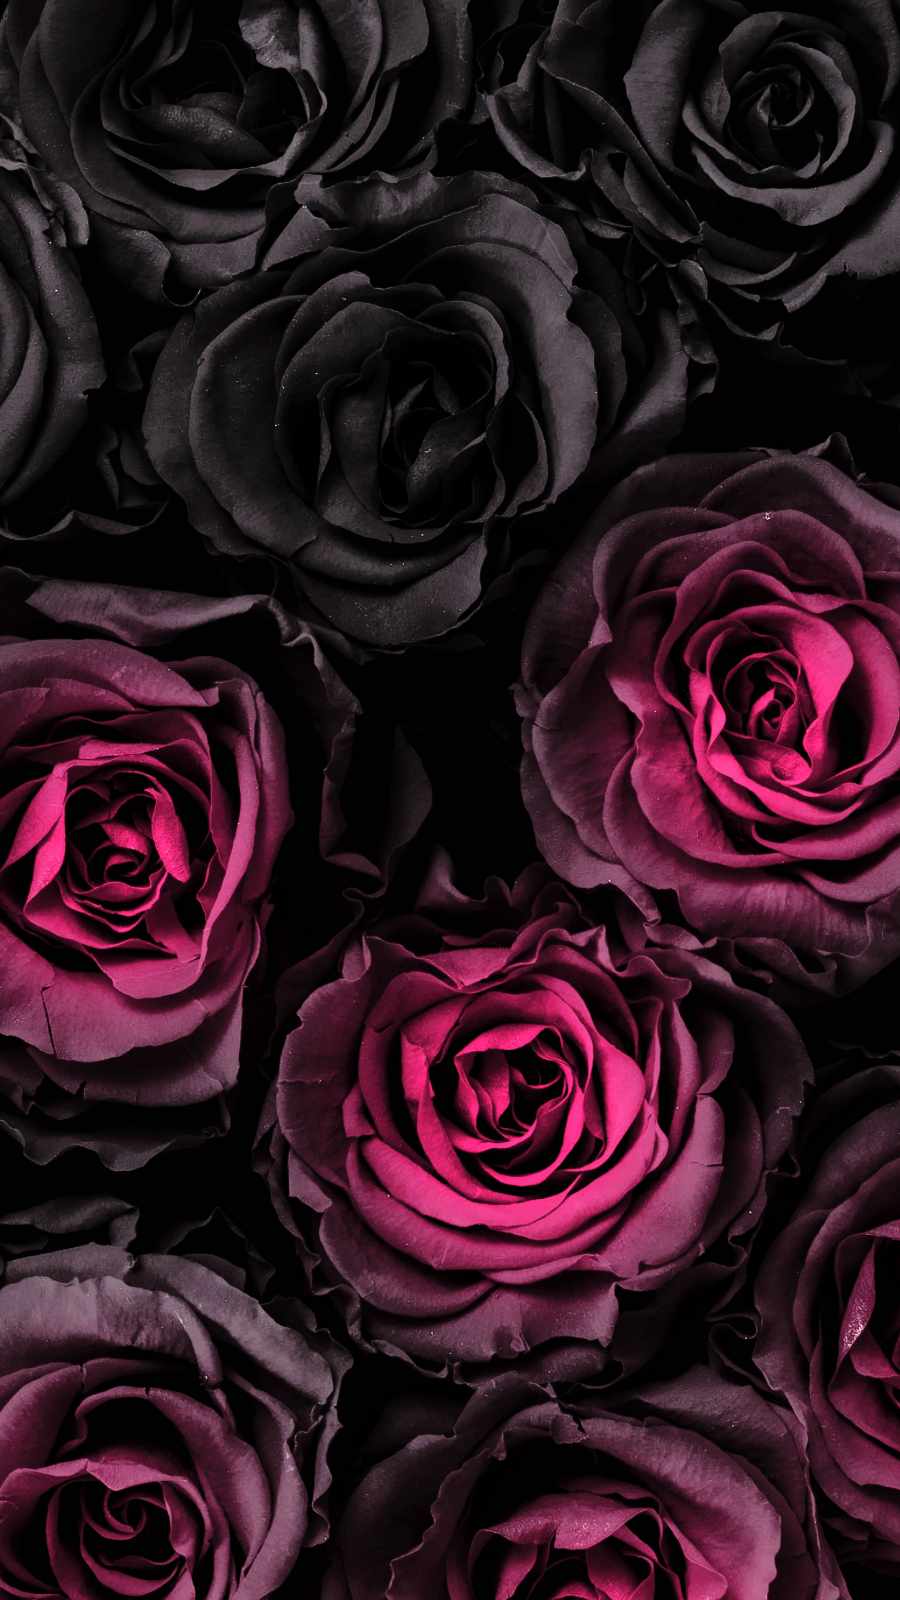 Dark Rose IPhone Wallpaper - IPhone Wallpapers : iPhone Wallpapers